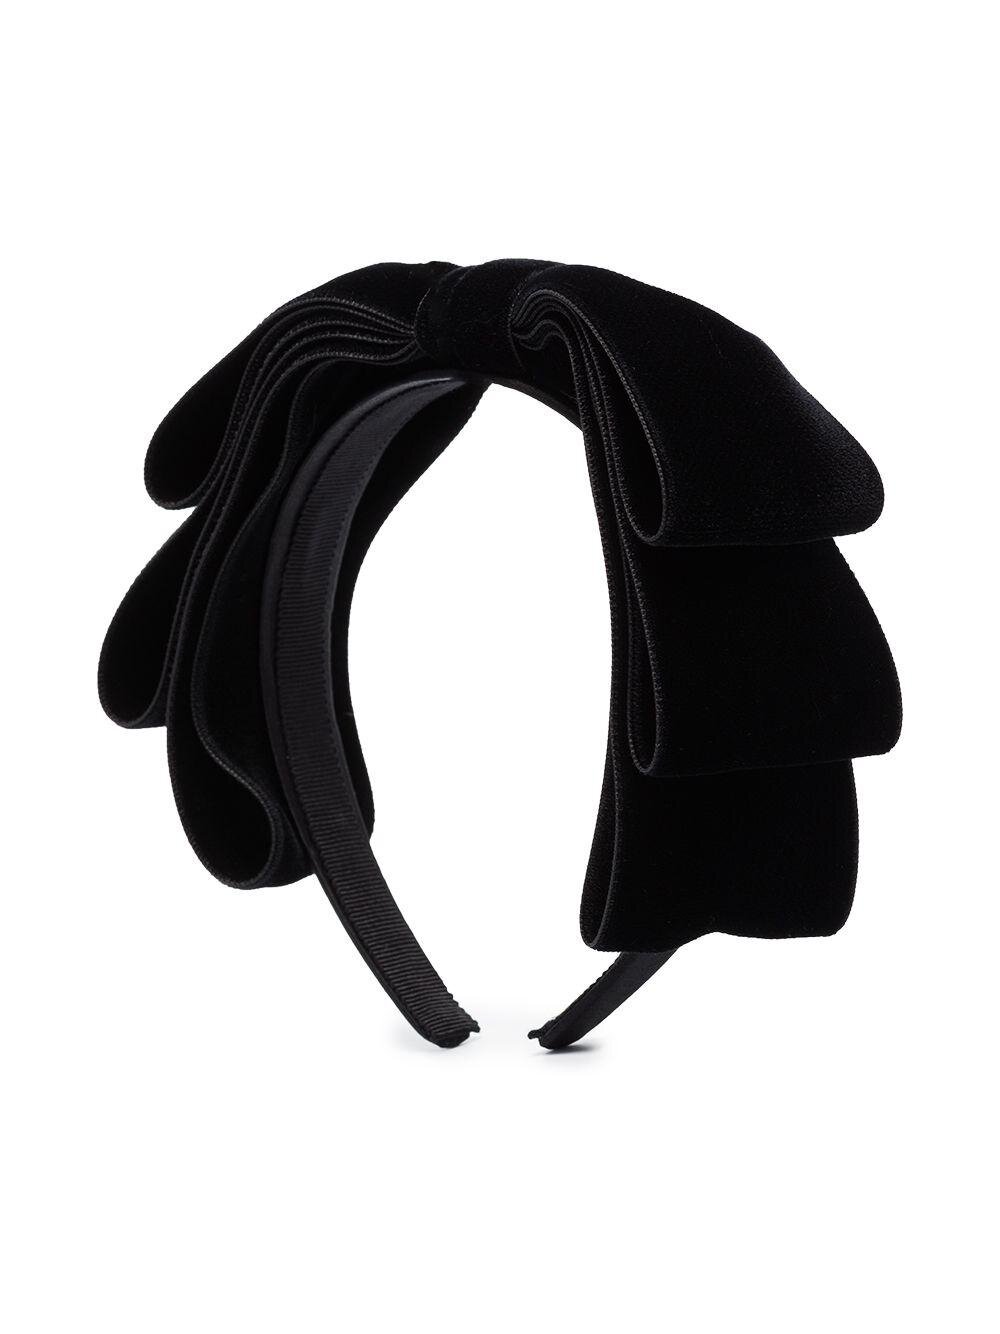 Jennifer Behr Katya Headband in Black Velvet.jpg